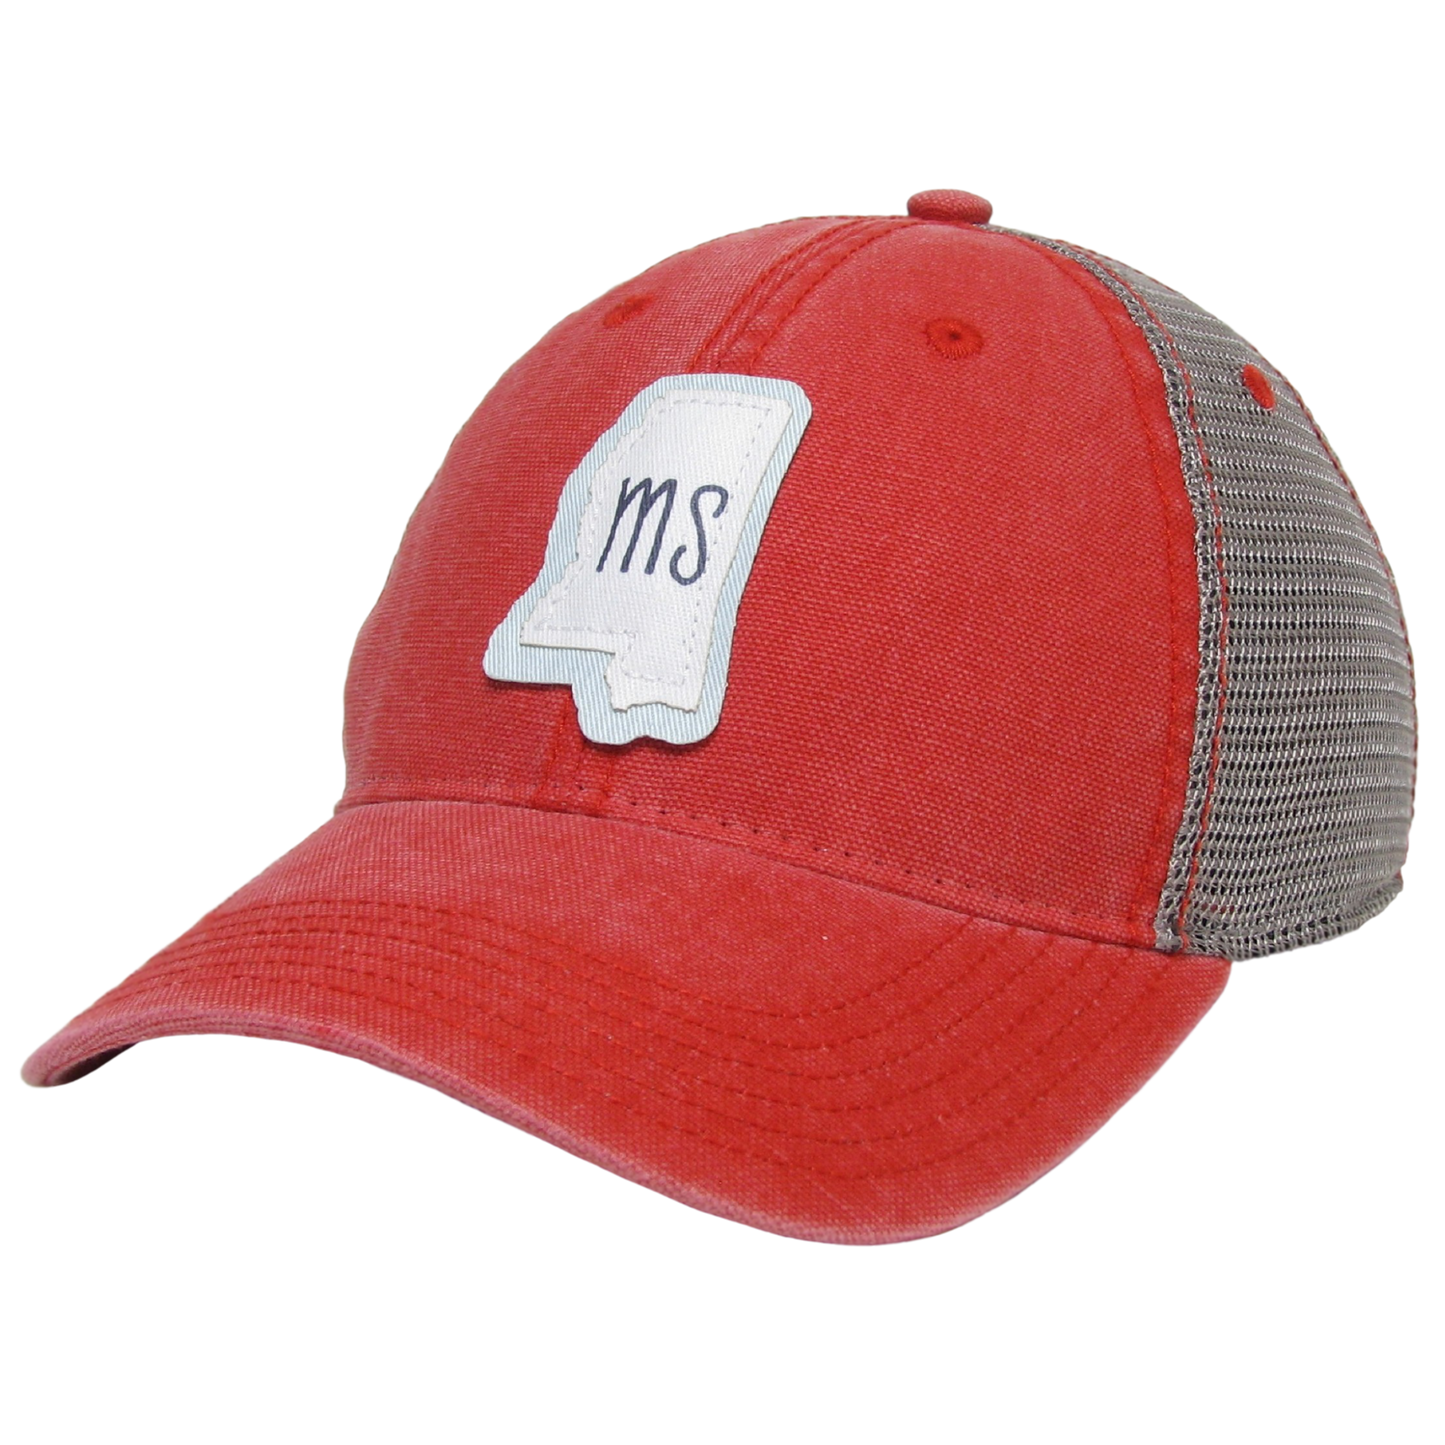 Mississippi Dashboard Trucker Hat in Red/Grey